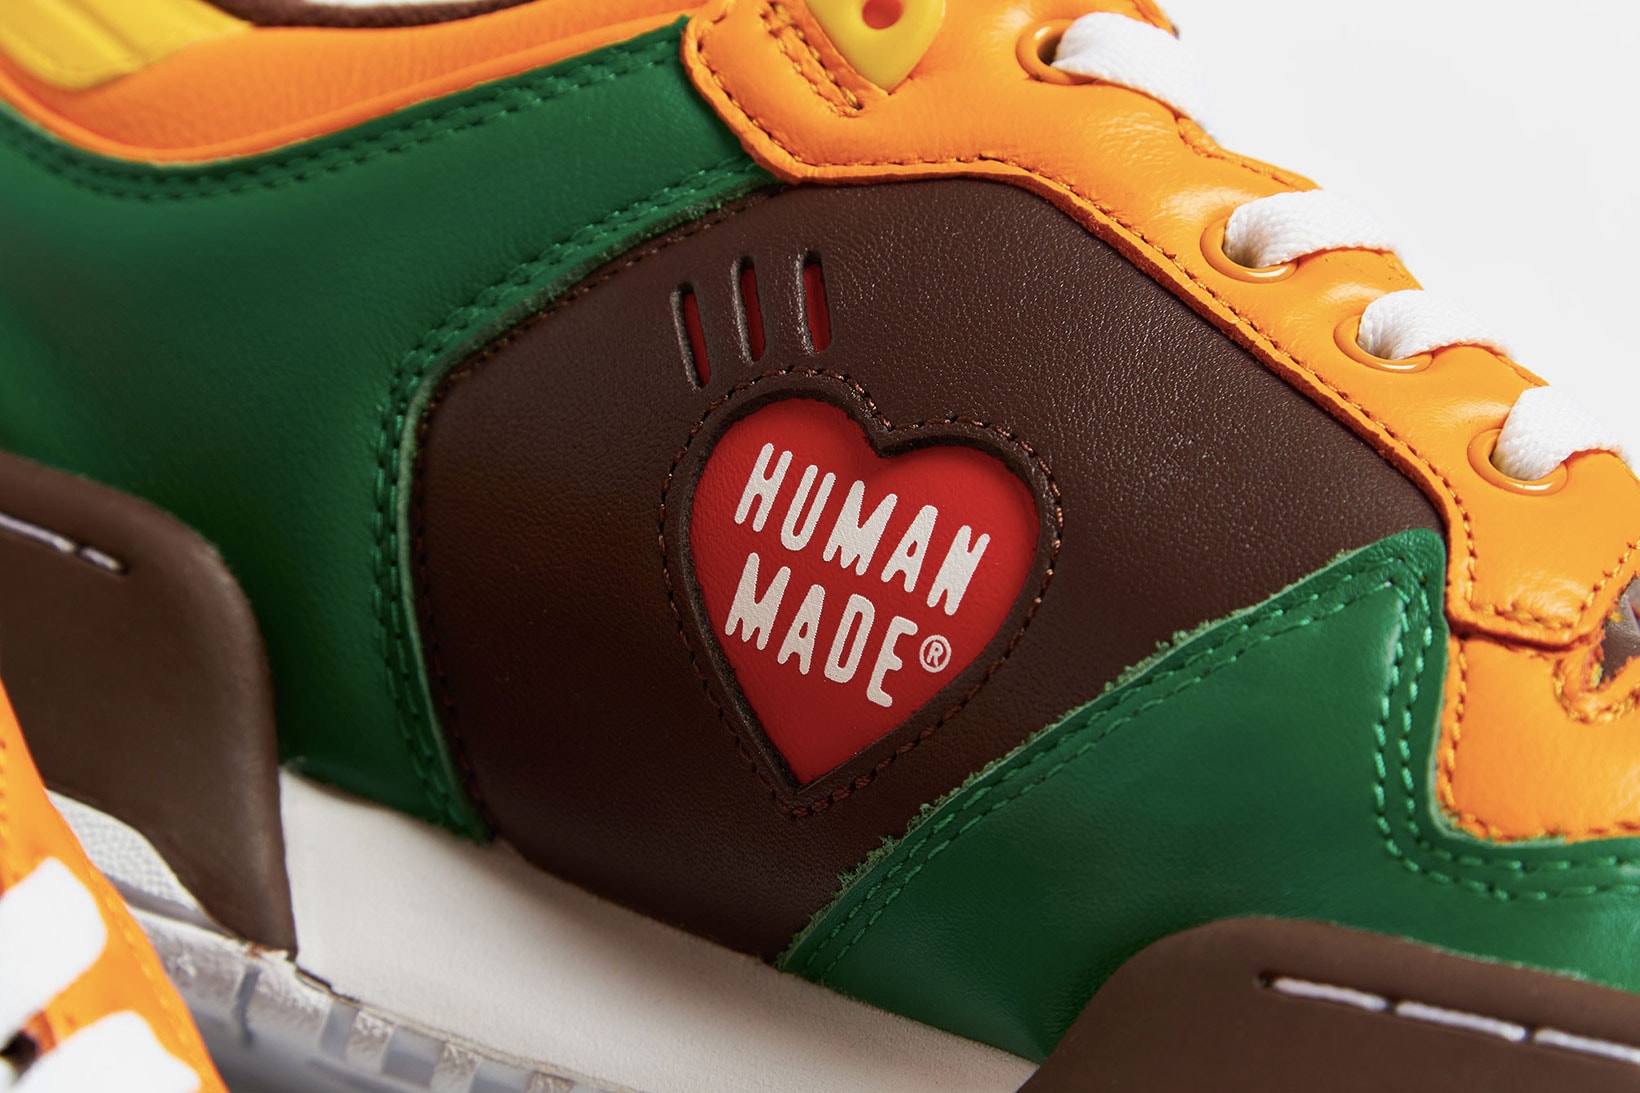 human made adidas originals stan smith rivalry campus collaboration nigo release date